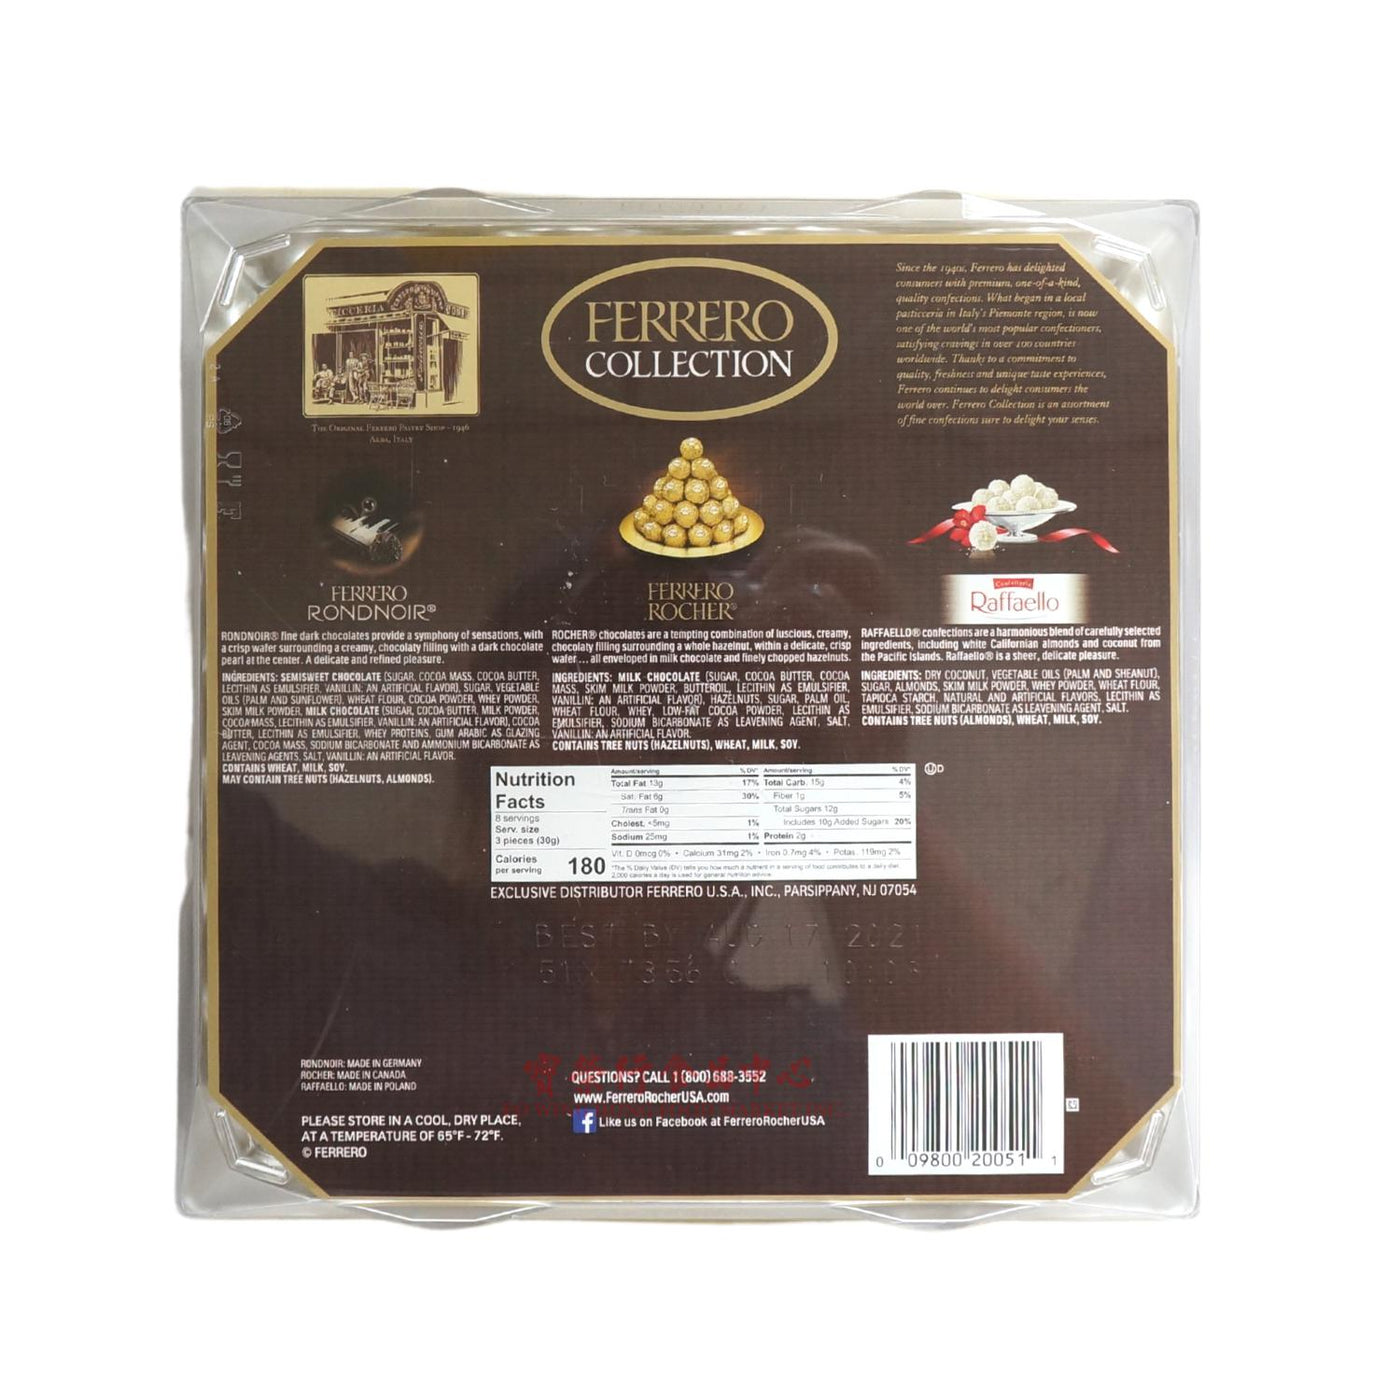 Chocolats Ferrero Prestige